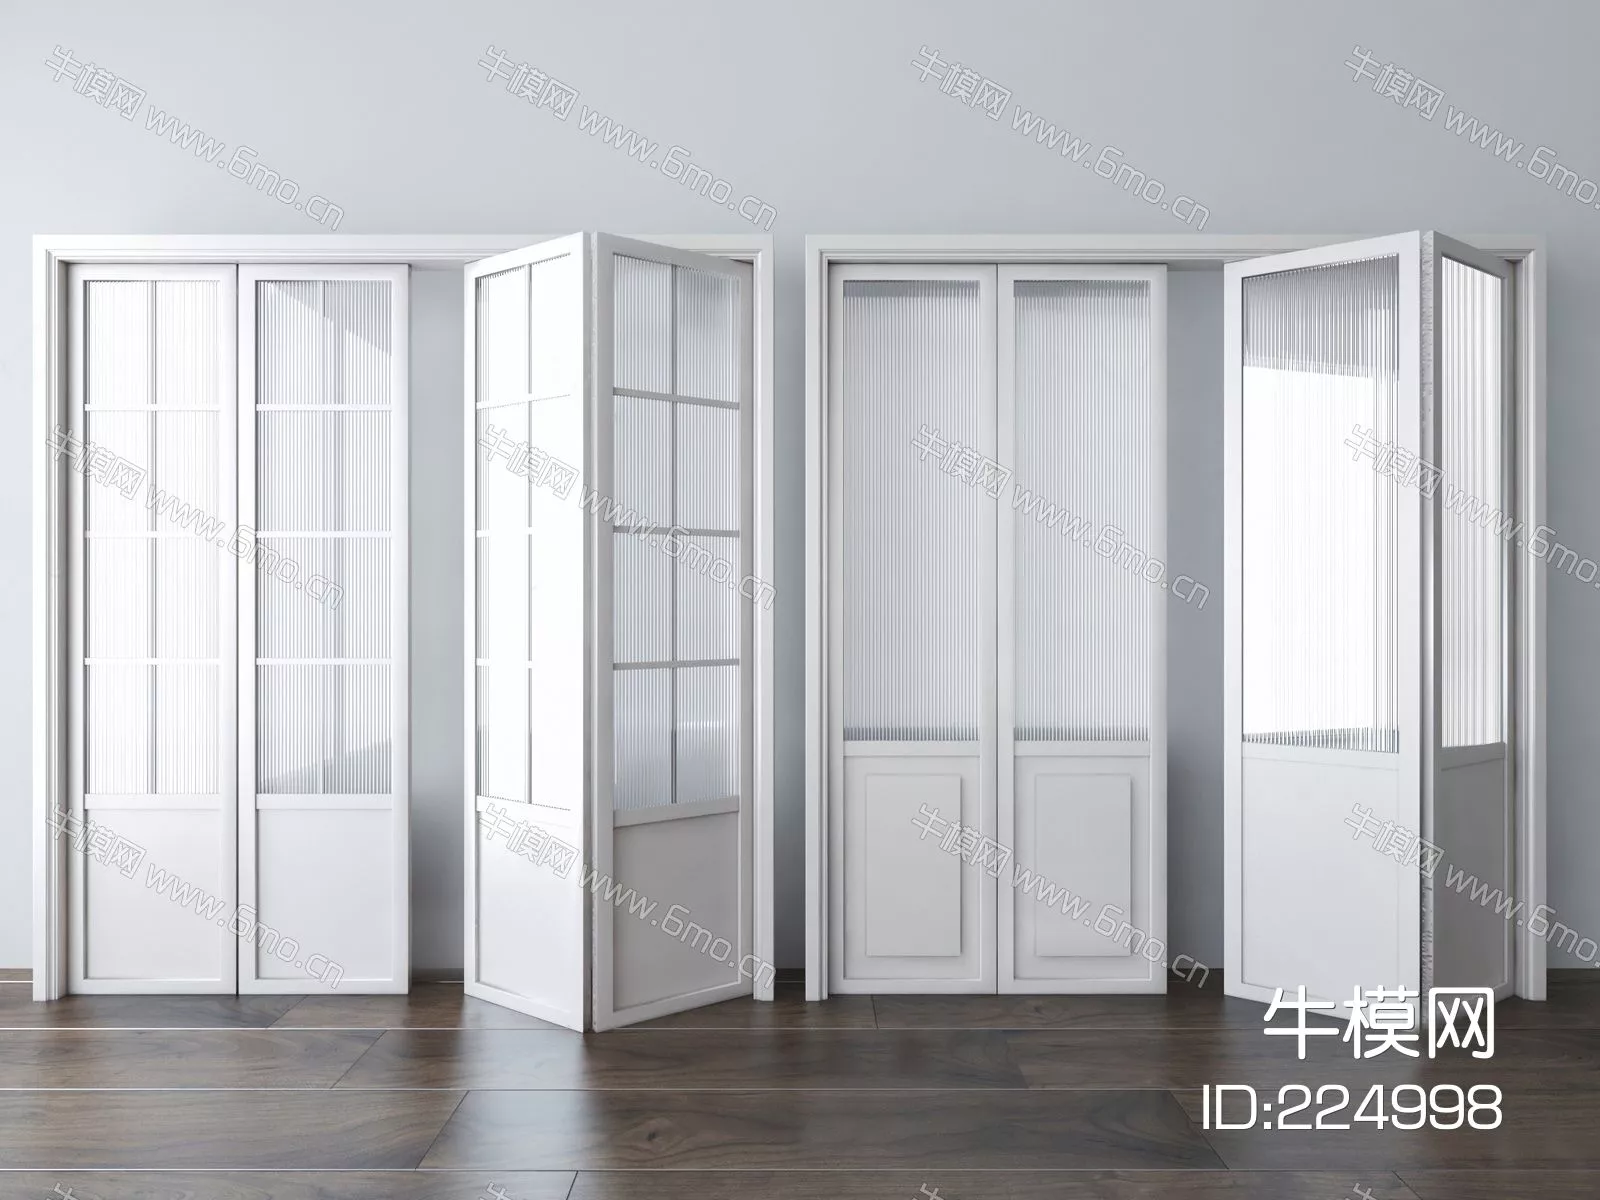 MODERN DOOR AND WINDOWS - SKETCHUP 3D MODEL - ENSCAPE - 224998